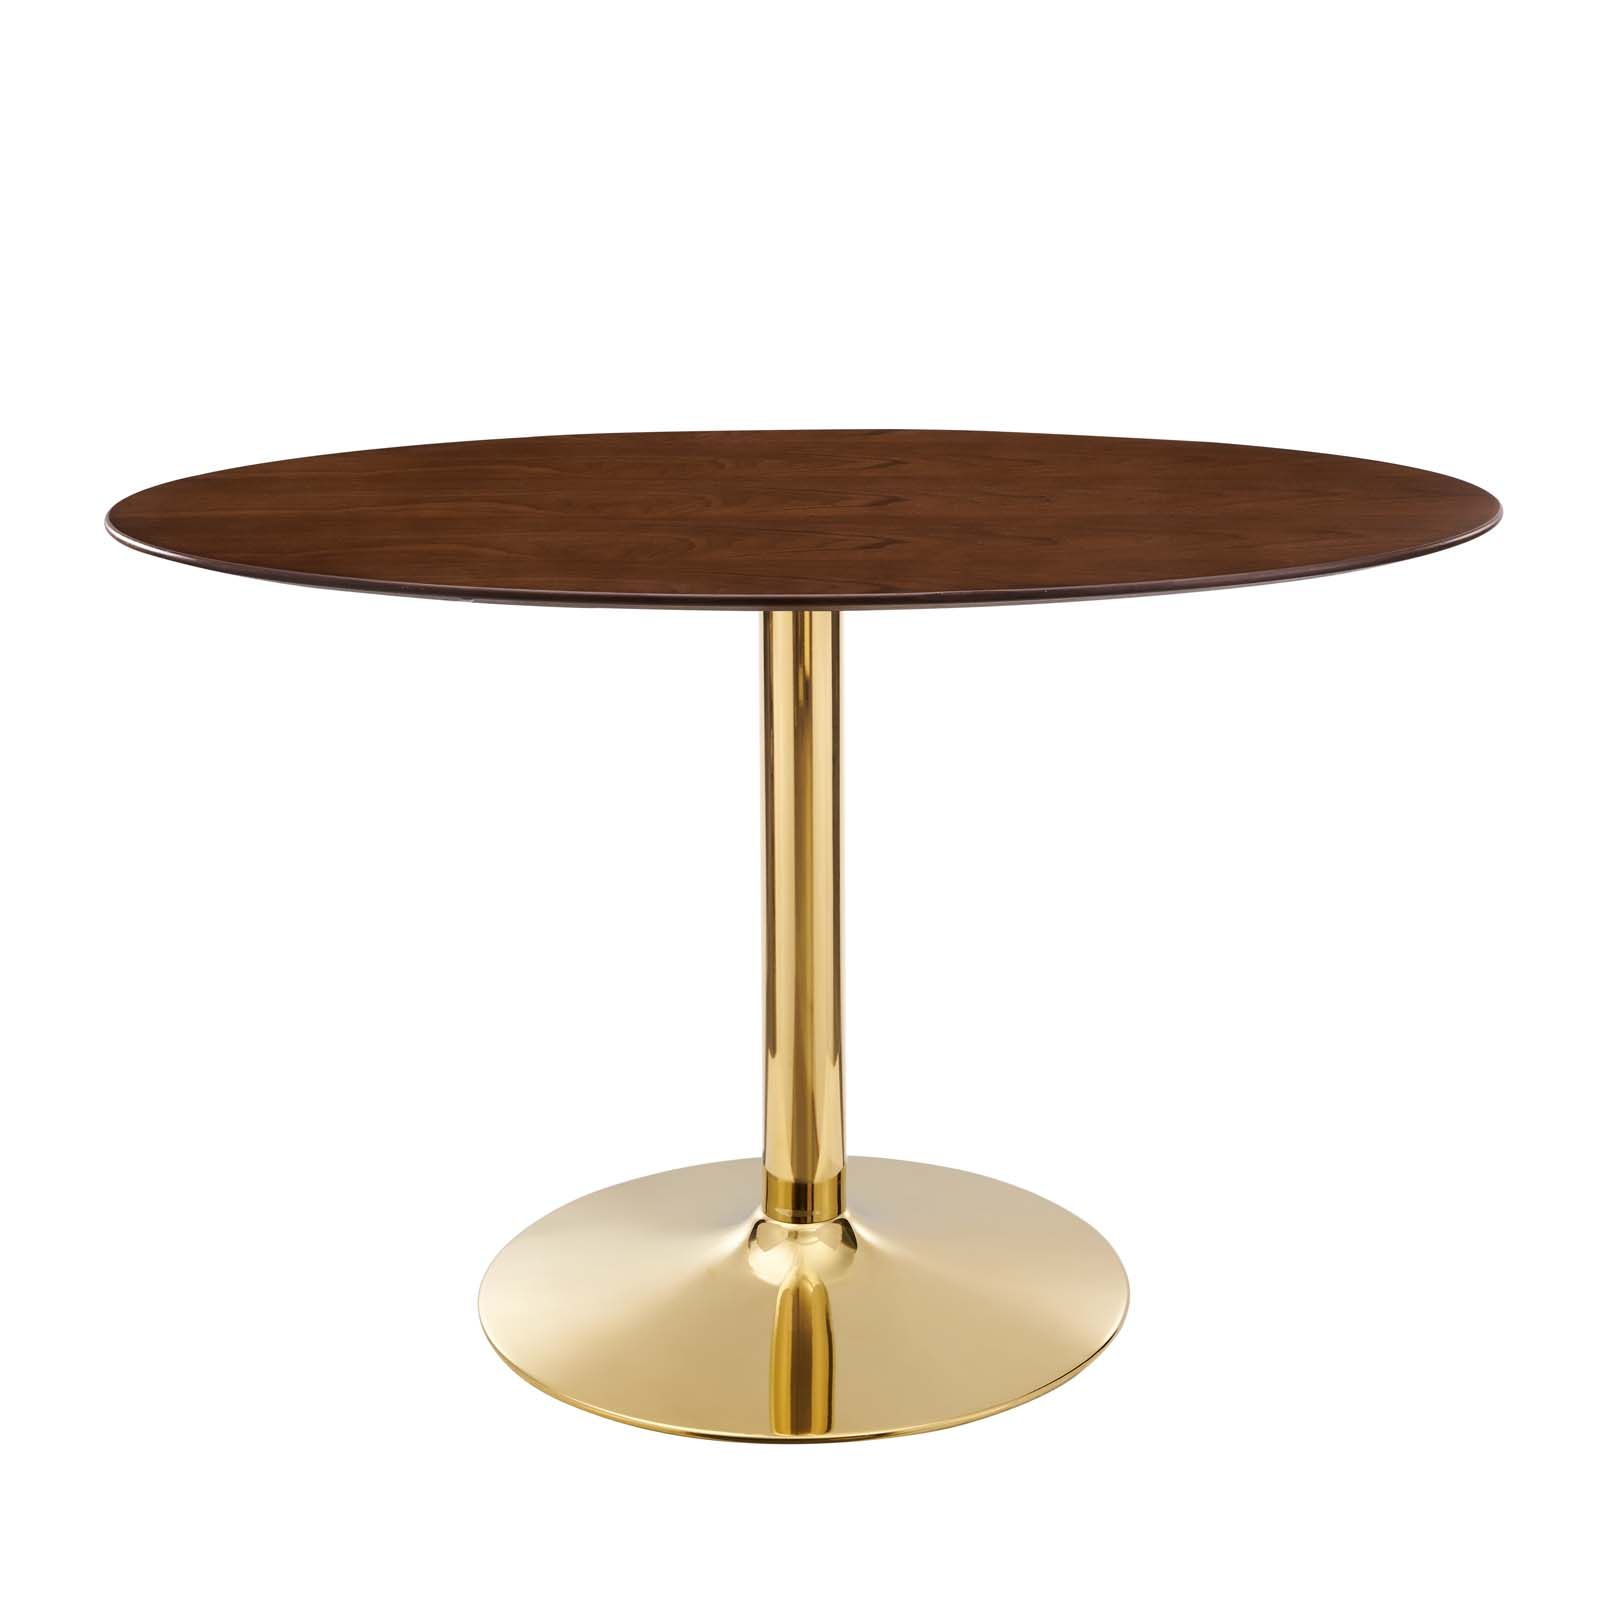 48 inch Dining Table, Oval, Gold Walnut, Wood, Metal Steel, Modern Contemporary, Mid Century Kitc... | Walmart (US)